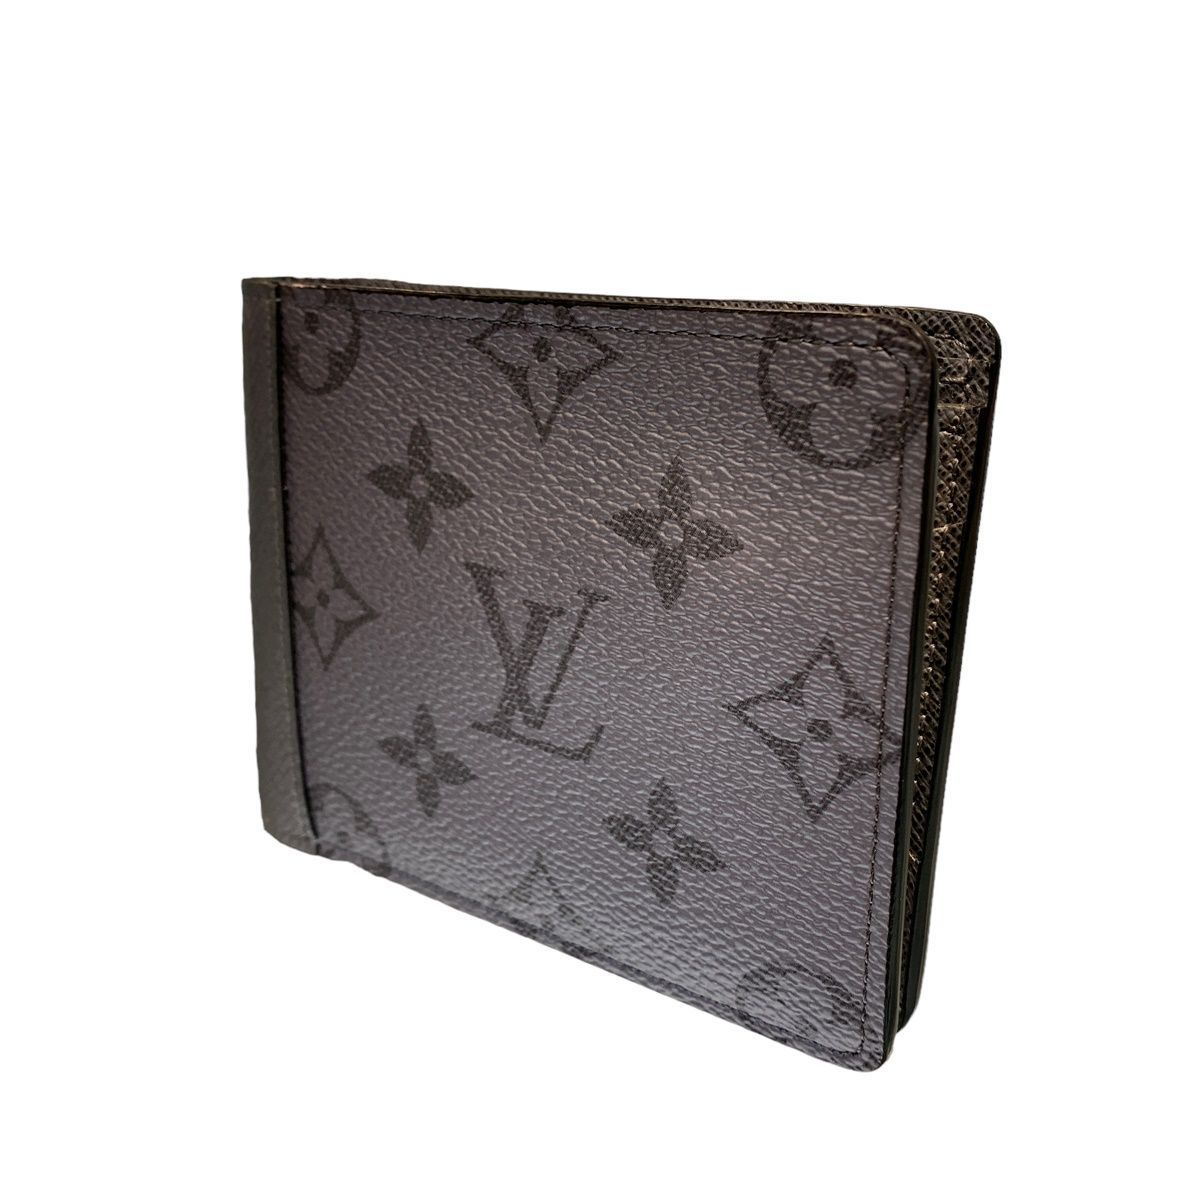 Louis Vuitton　ヴィトン　ポルトフォイユ　ミュルティプル　折り財布可能ですおいくらご希望ですか